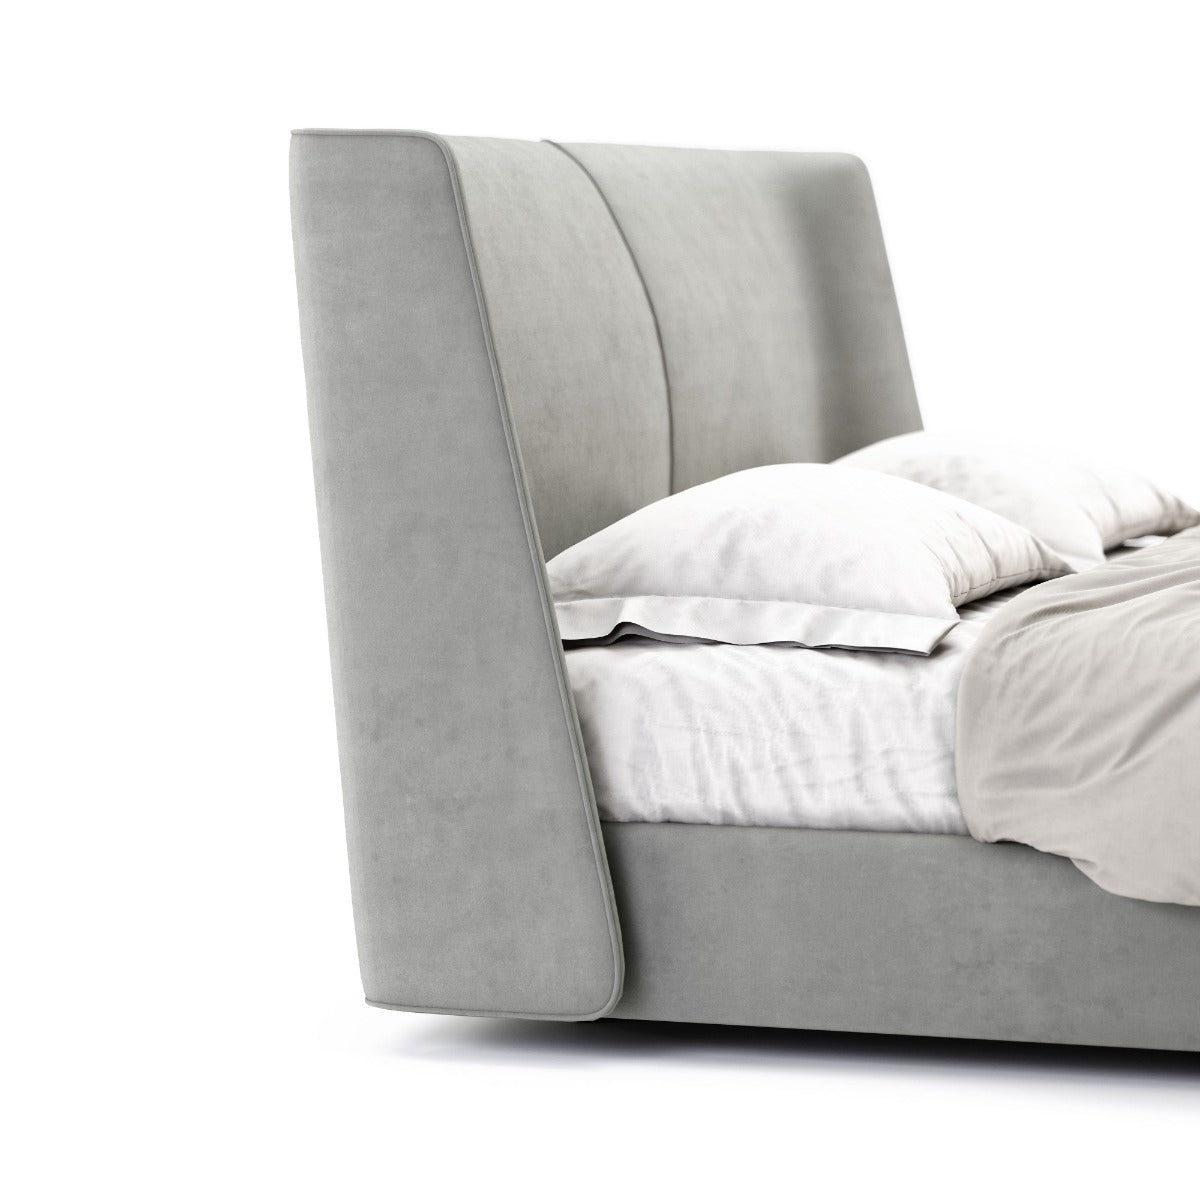 Domkapa Echo King Size Bed - Customisable | Modern Furniture + Decor